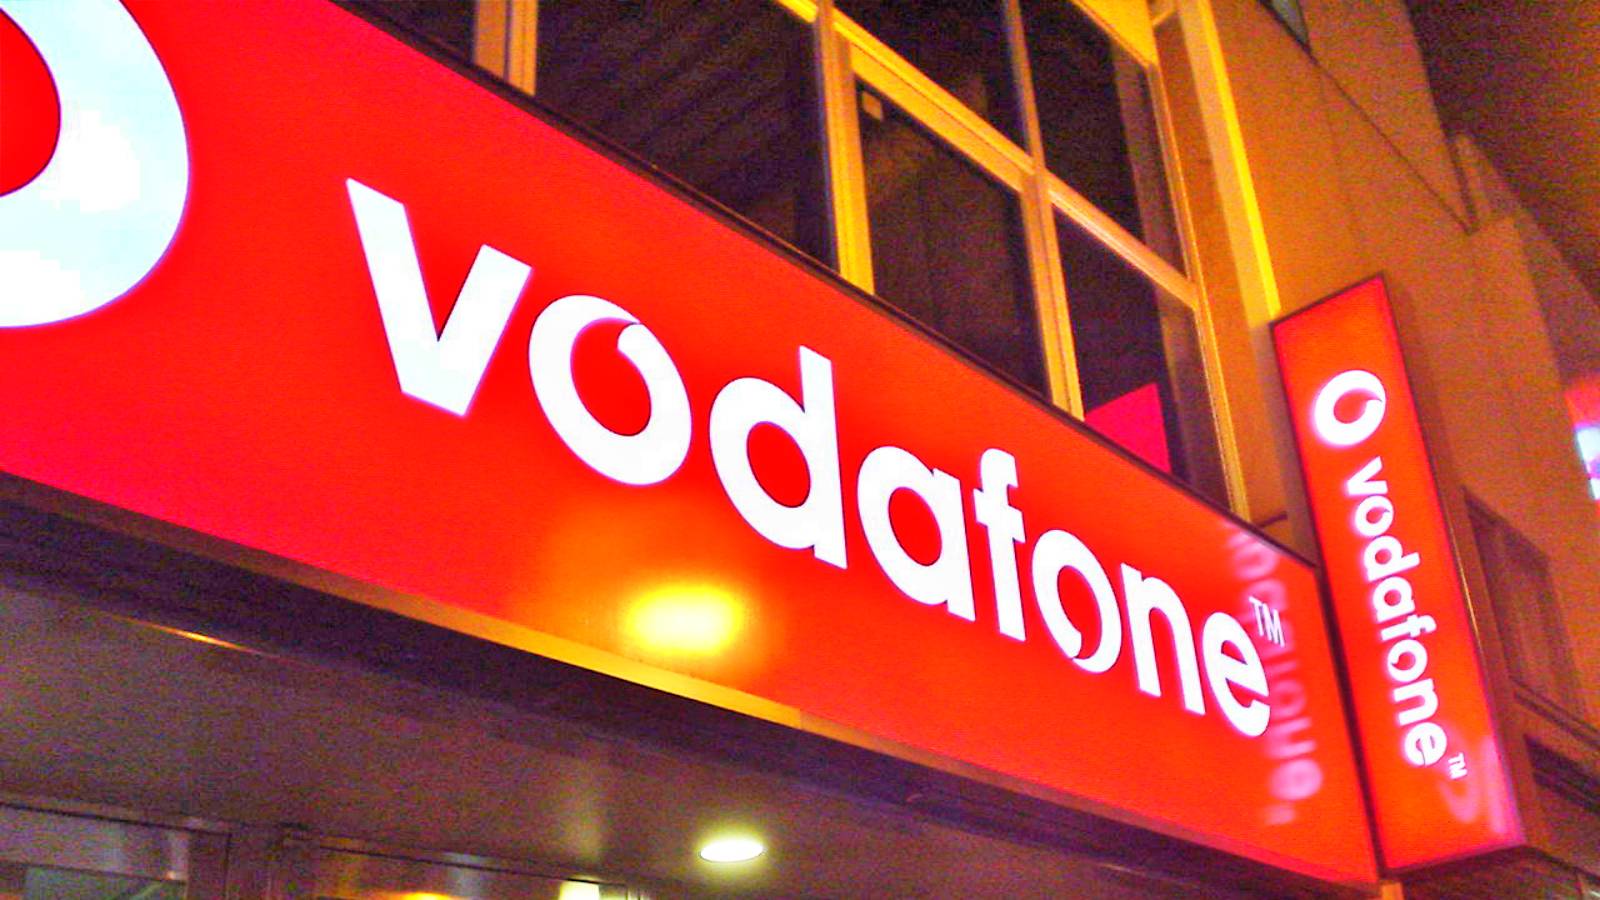 Vendredi noir Vodafone 2021